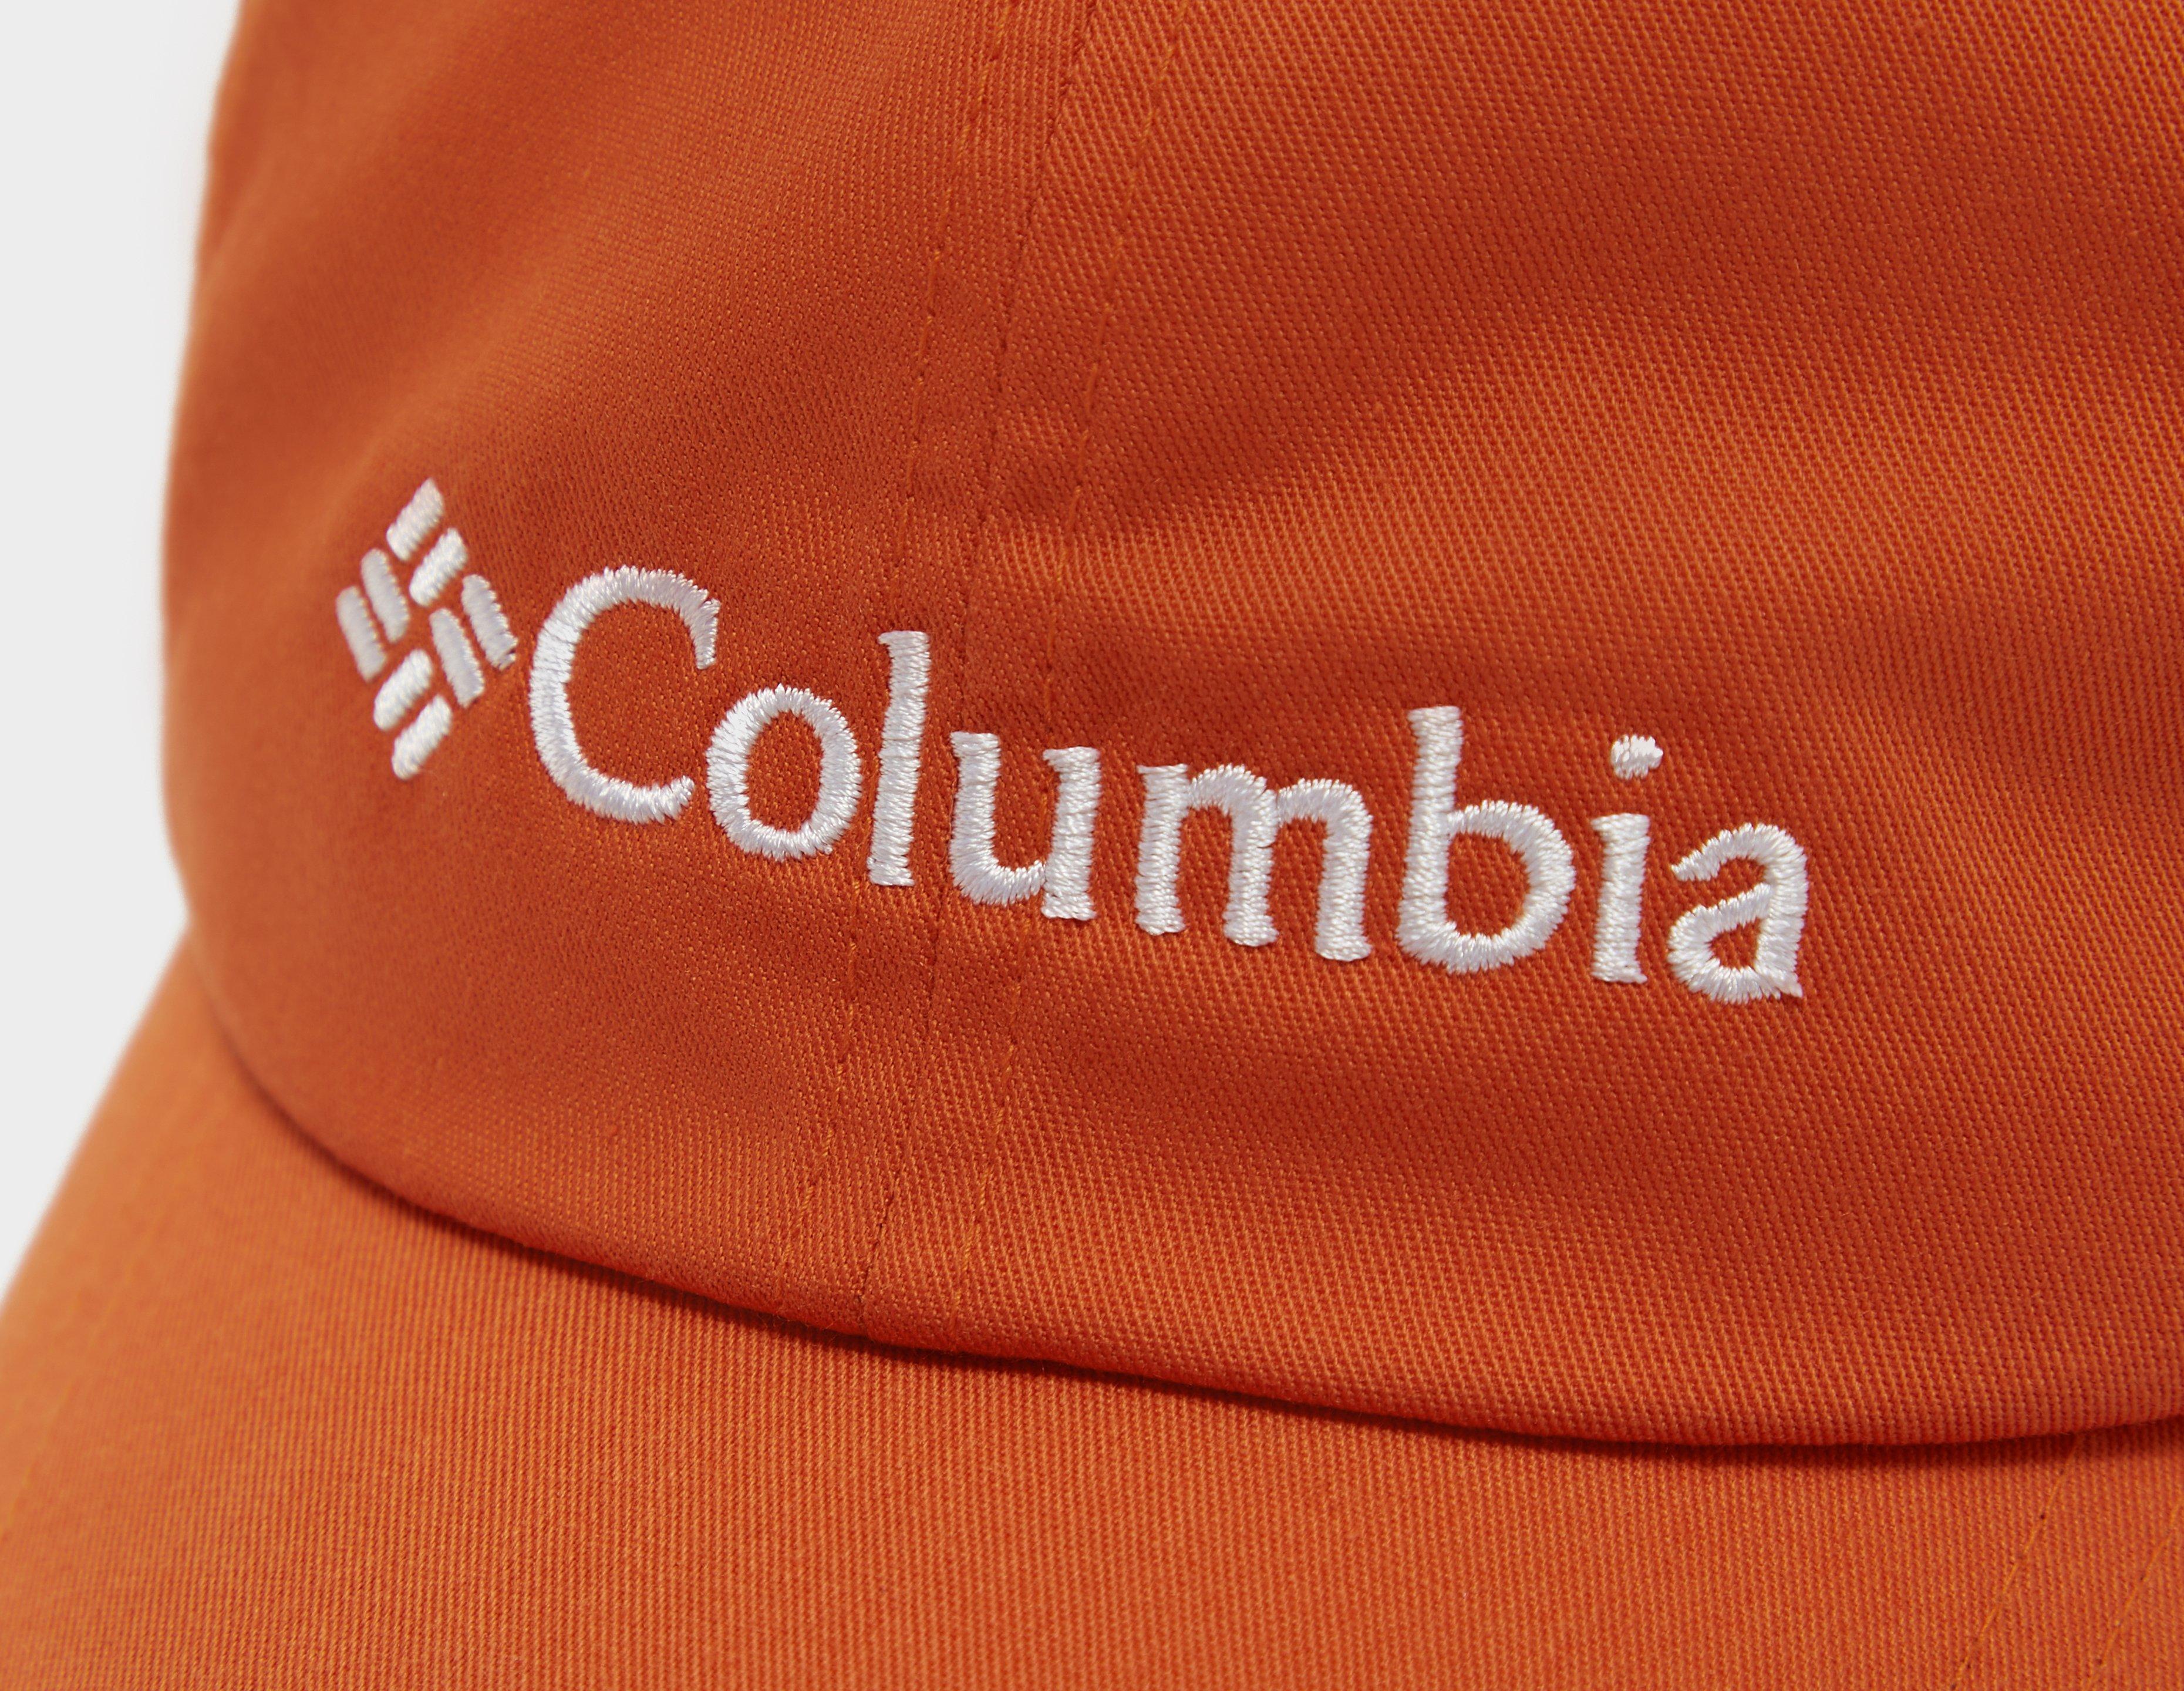 Hermès pre-owned fedora hat | Healthdesign? | Orange Columbia ROC Logo Cap